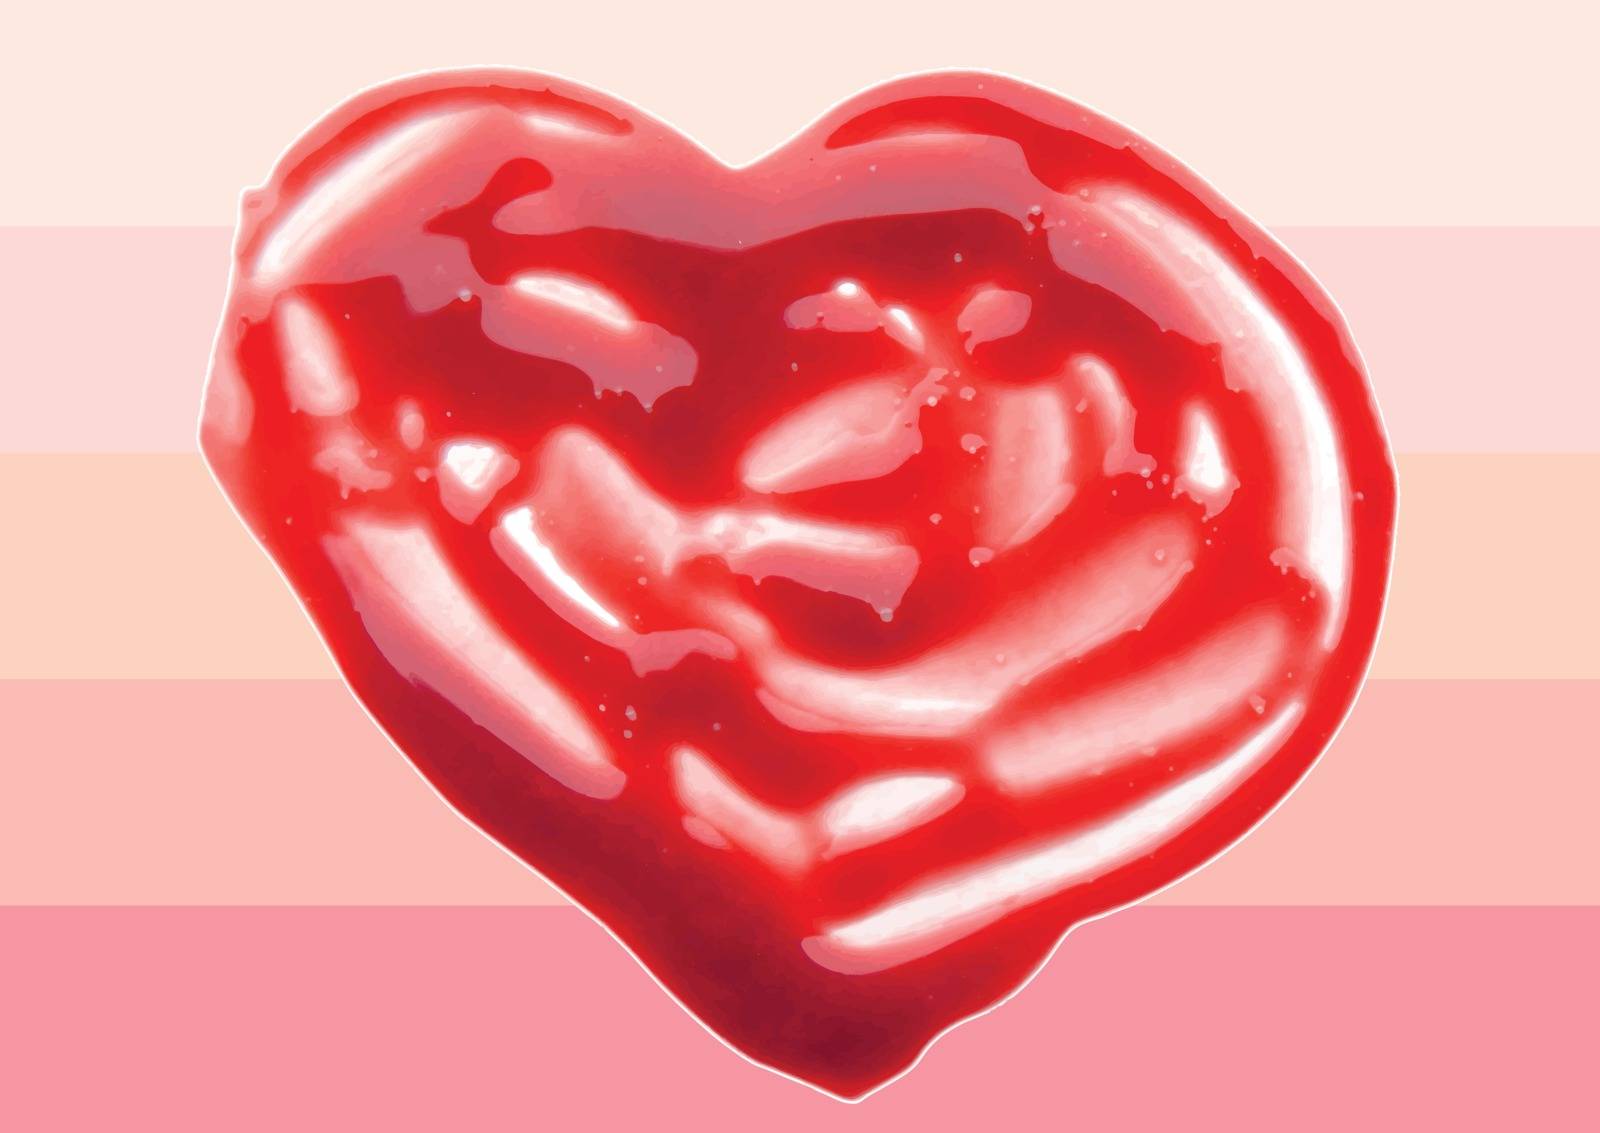 Lip Gloss heart shaped illustration by aroas